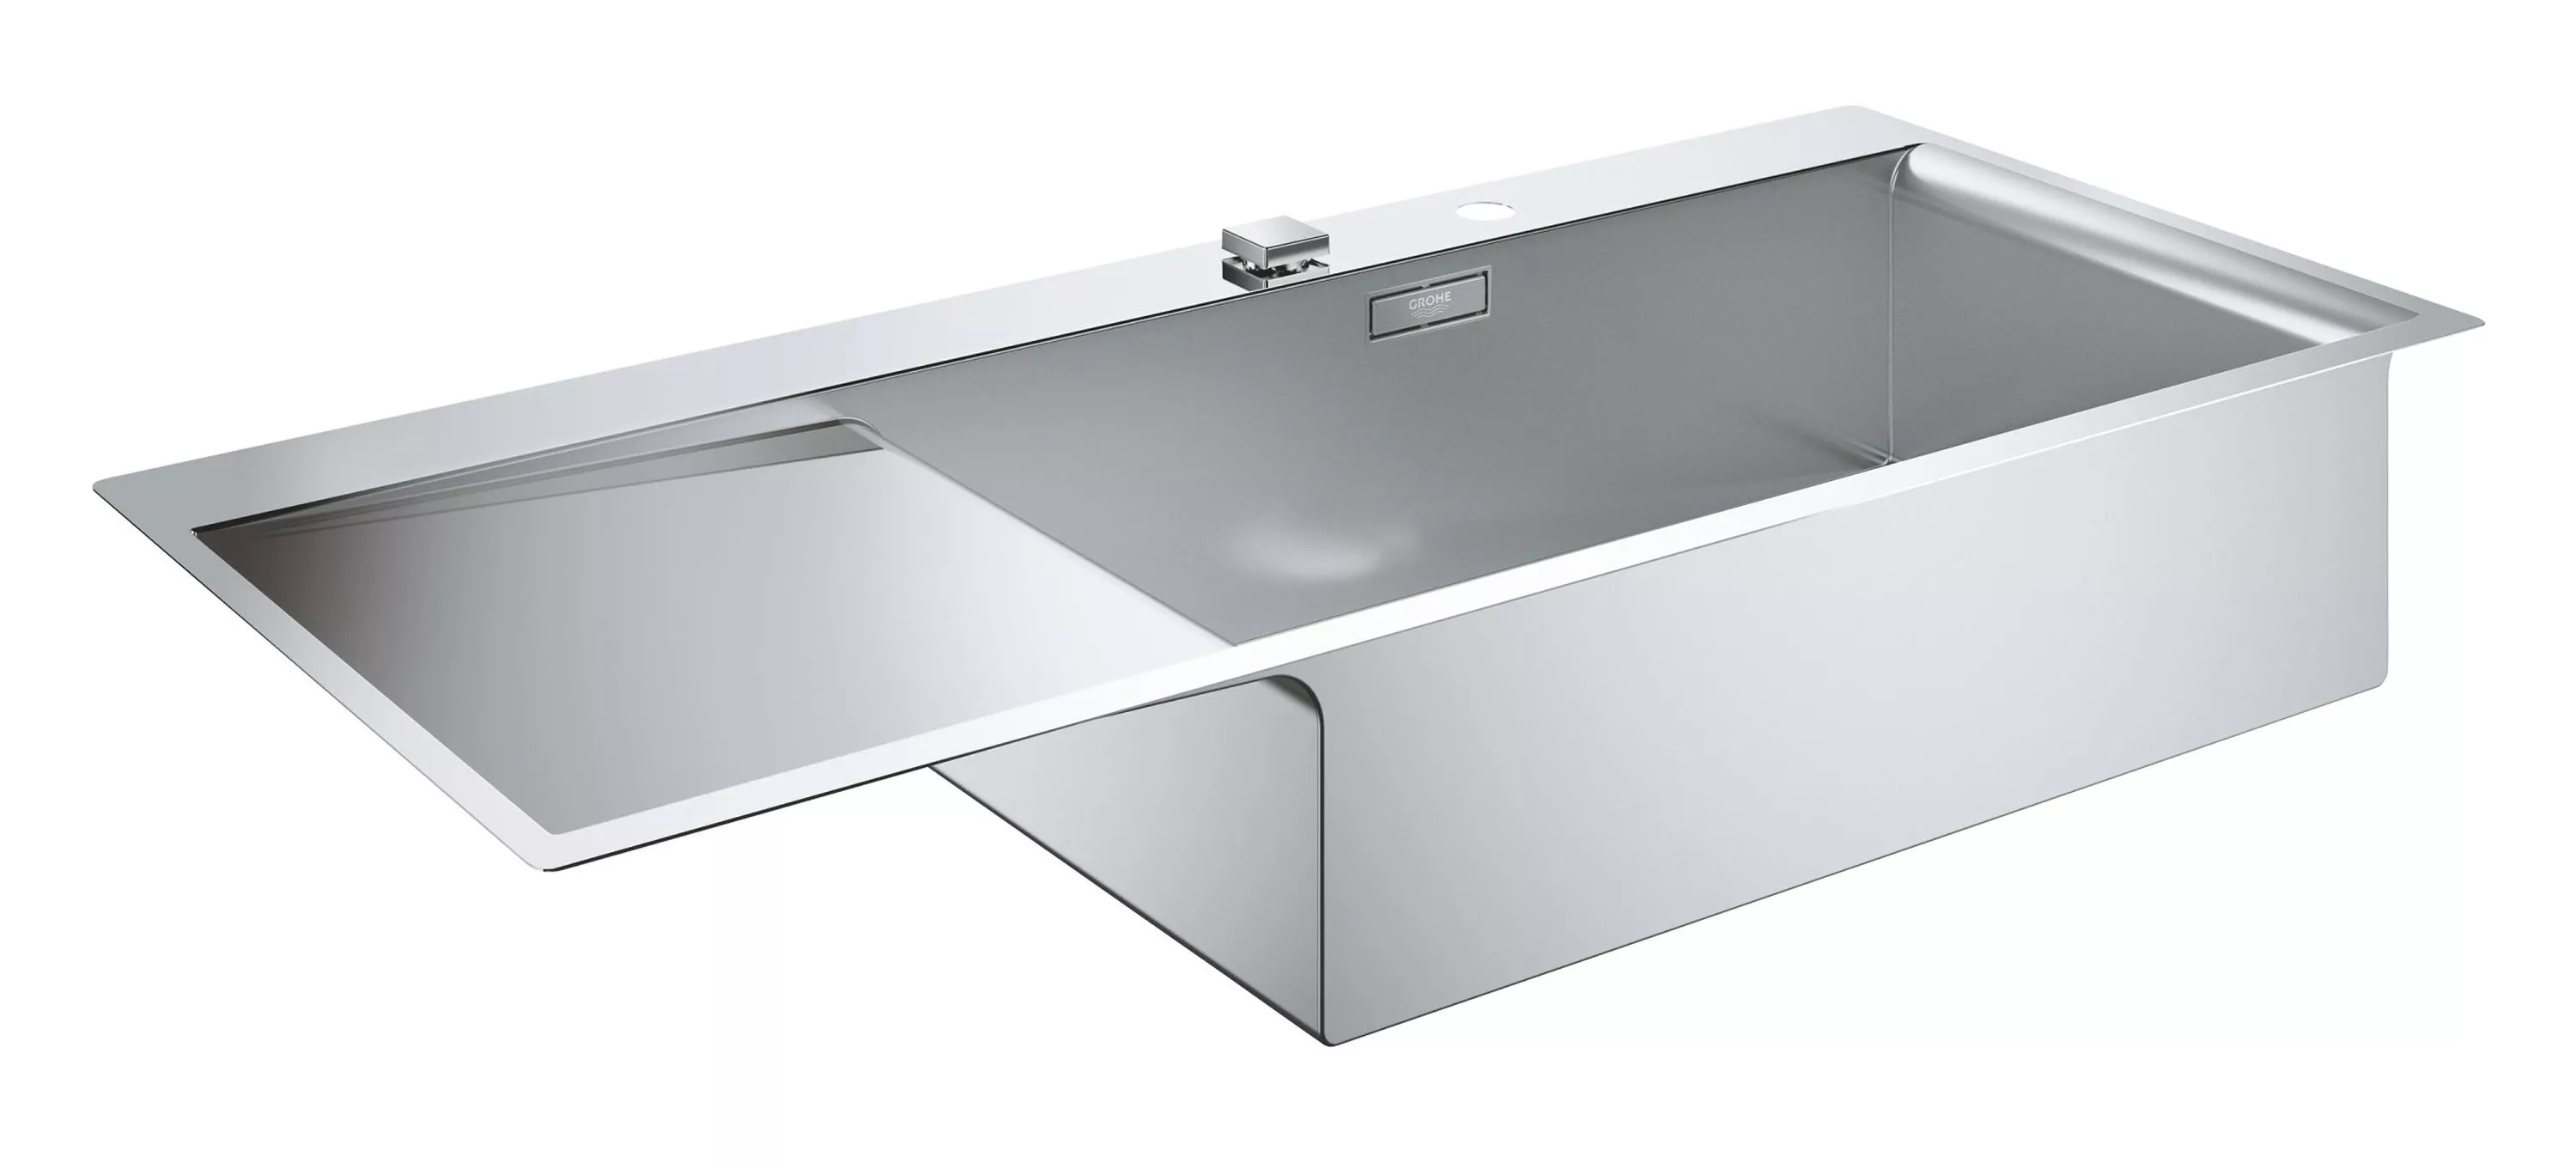 Кухонний змішувач Grohe Eurosmart Cosmopolitan + Кухонна мийка Grohe EX Sink K1000 31582SD032843002 (32843002 + 31582SD0) ціна